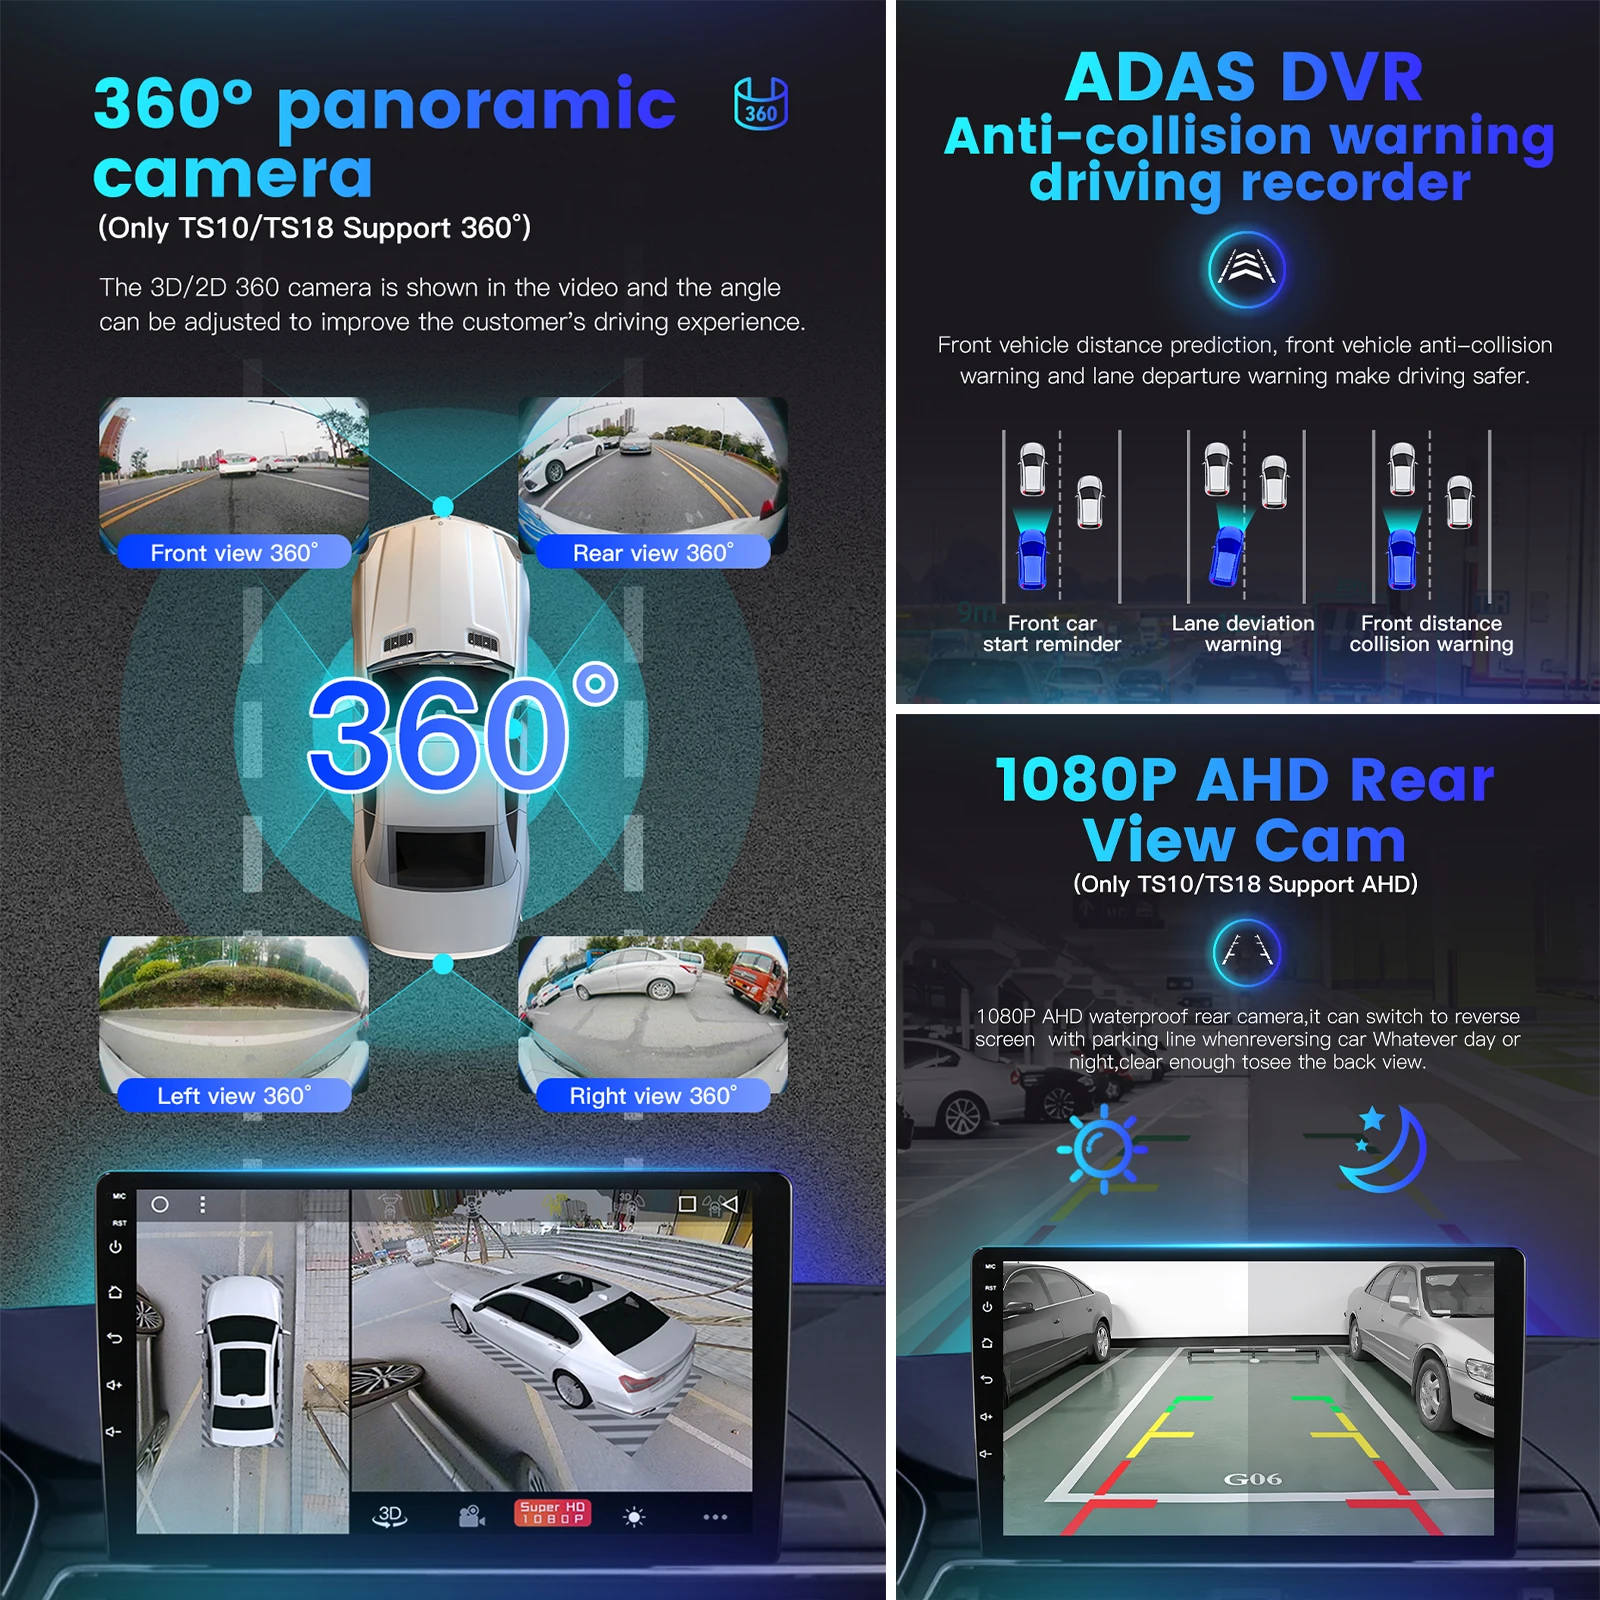 TOPSOURCE 8 Core 8G+256G Android Auto Radio For VW Volkswagen POLO 5 sedan  2008- 2020 Carplay Car Multimedia GPS autoradio - AliExpress